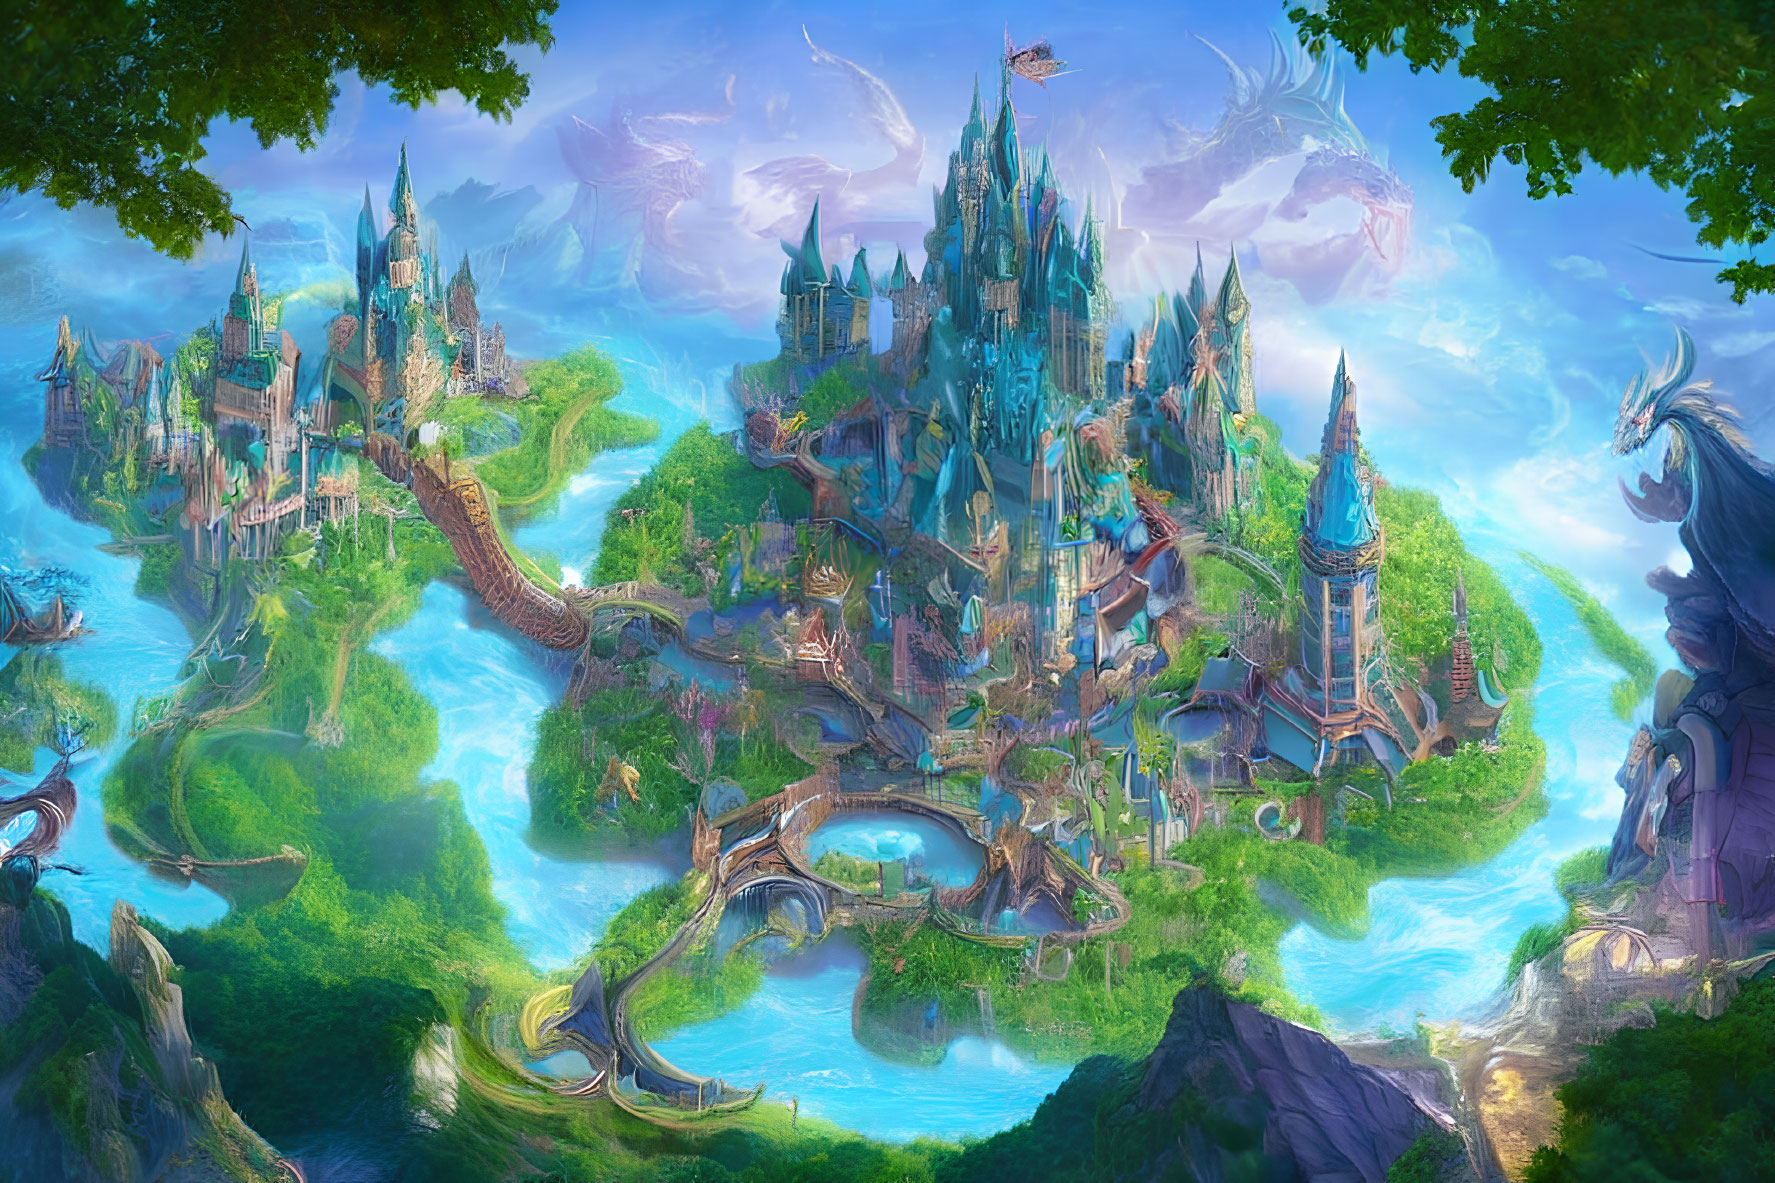 Majestic castle in fantastical landscape with dragons